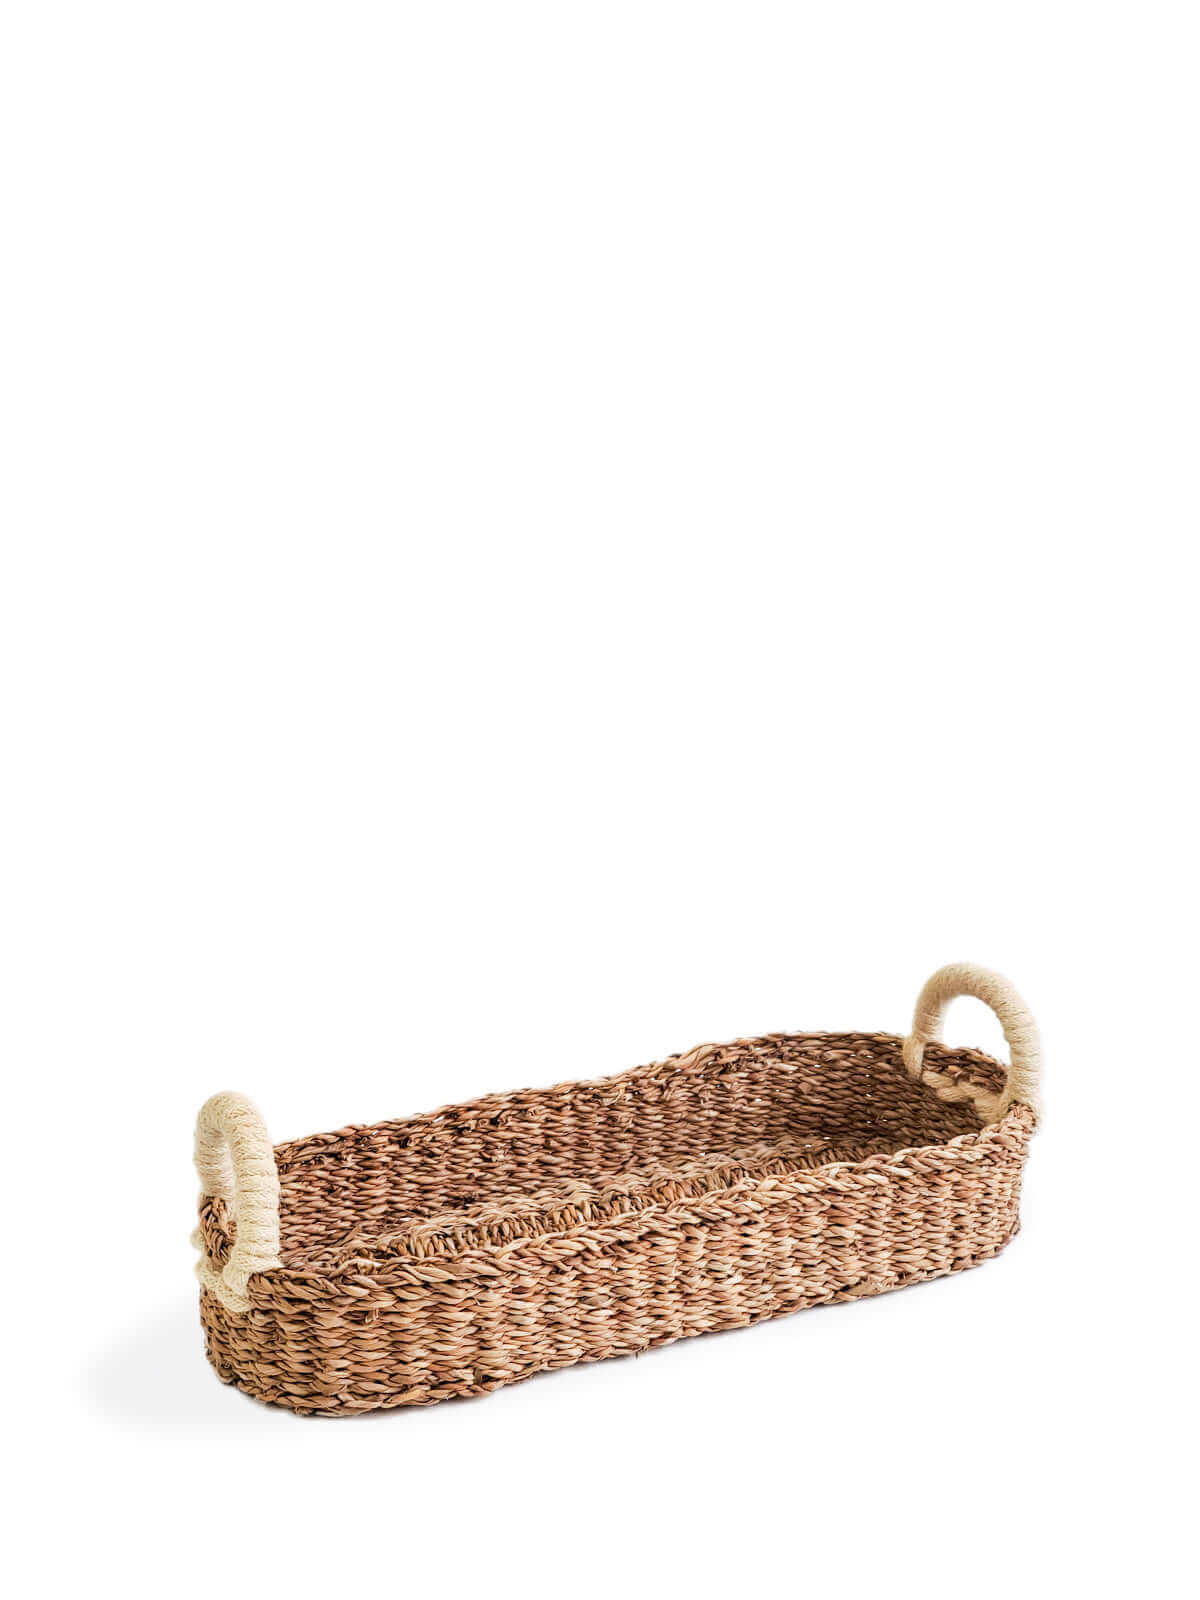 Savar Bread Basket with White Handle-8